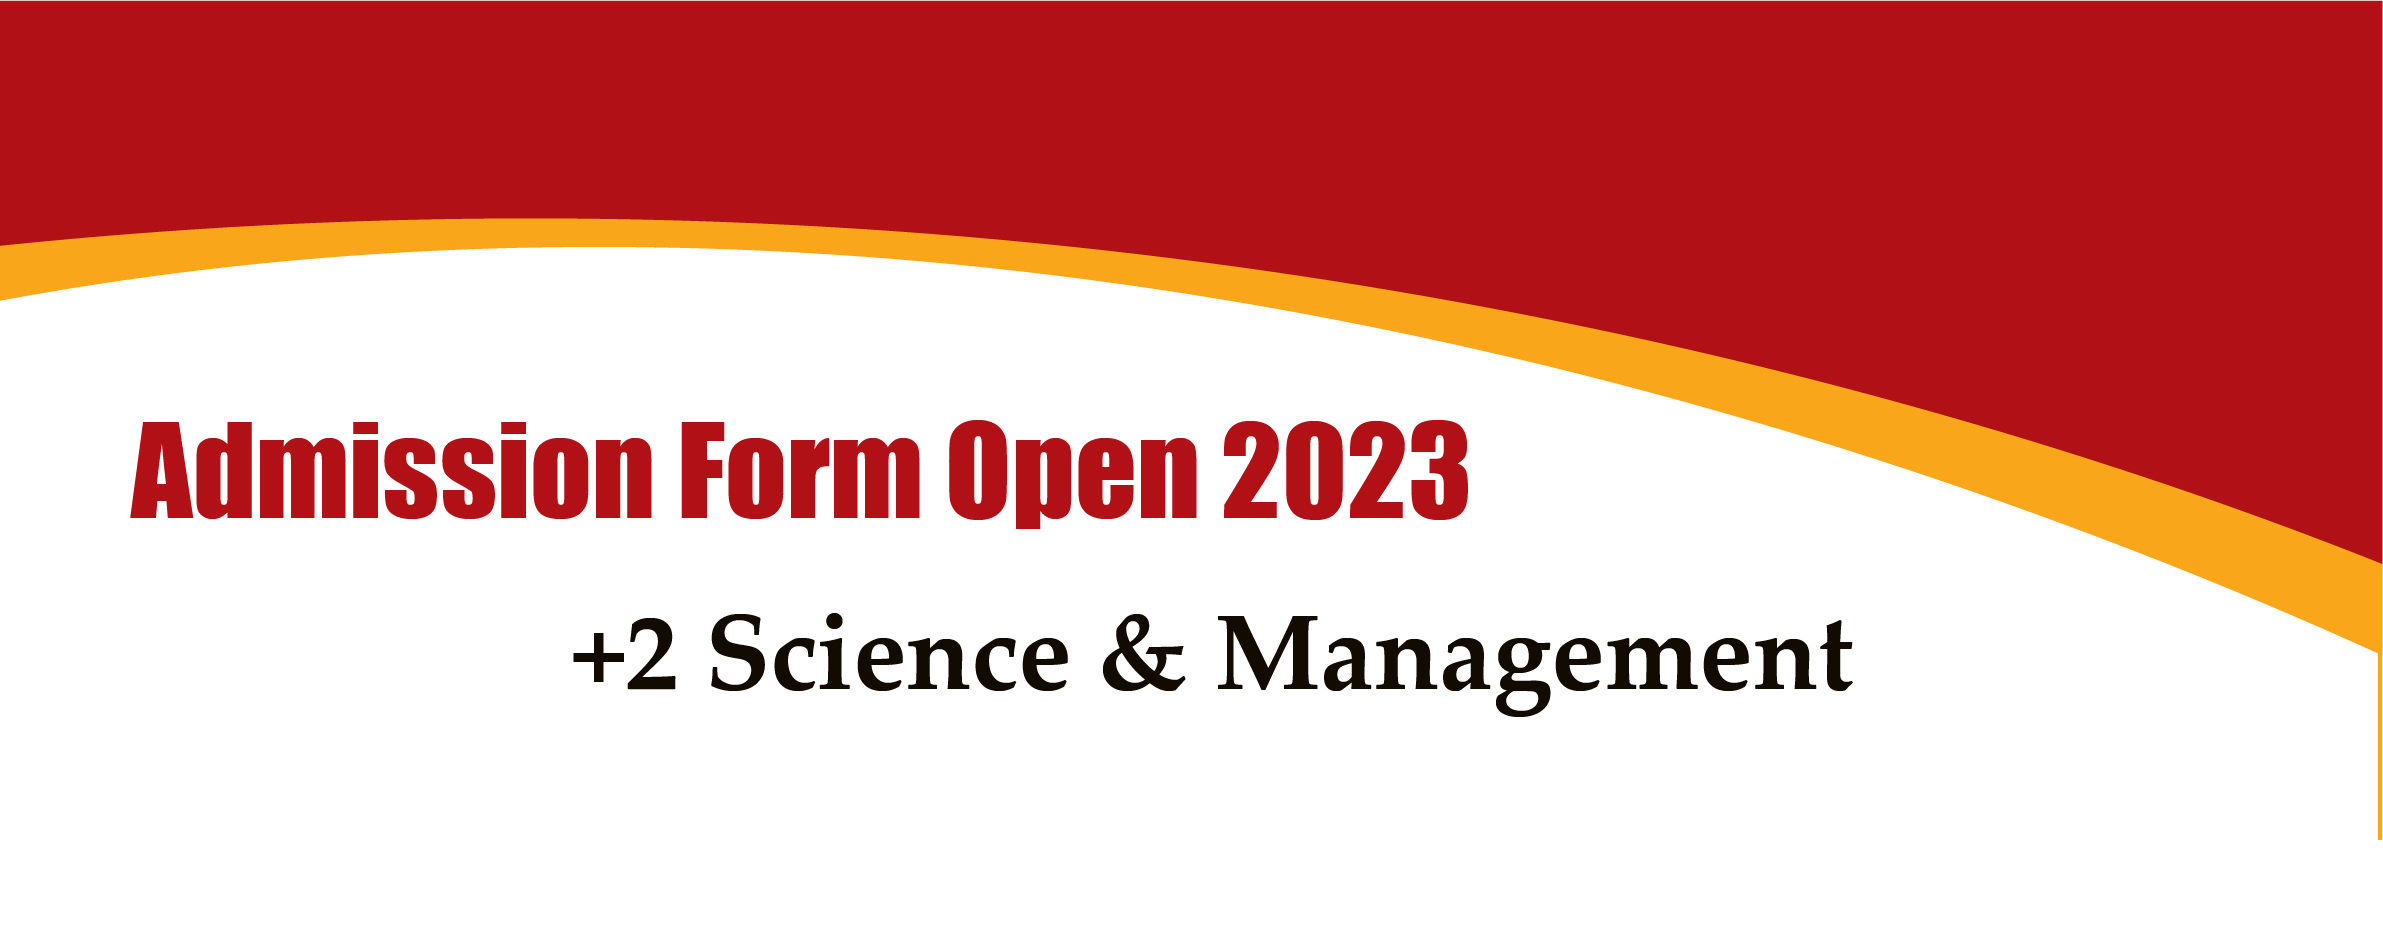 Entrance Form Open 2023